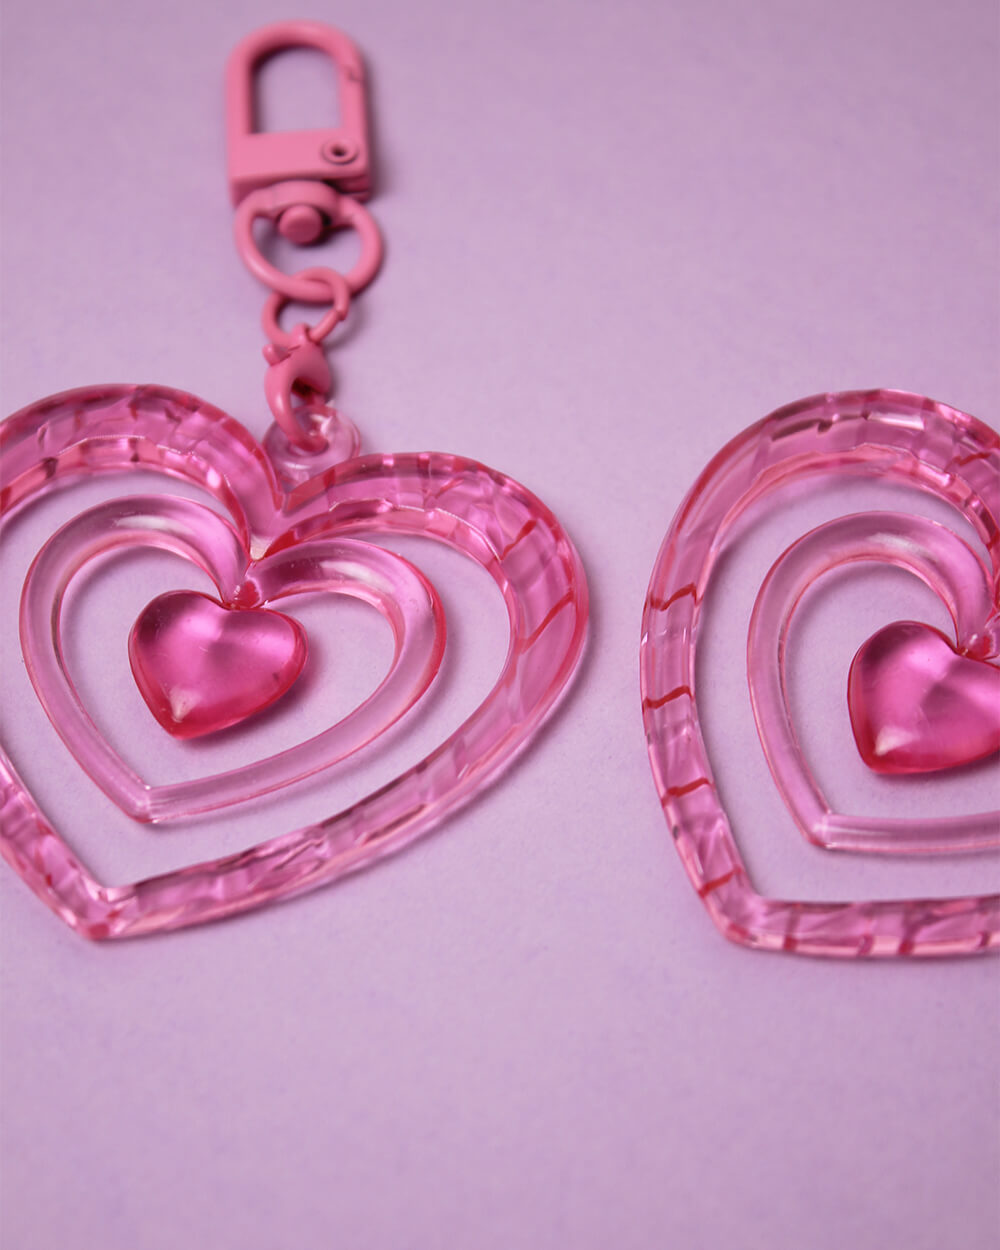 Handmade Heart-Shaped Pattern Macrame Friendship Bracelet - Kawaiienvy Hearts Black Pink